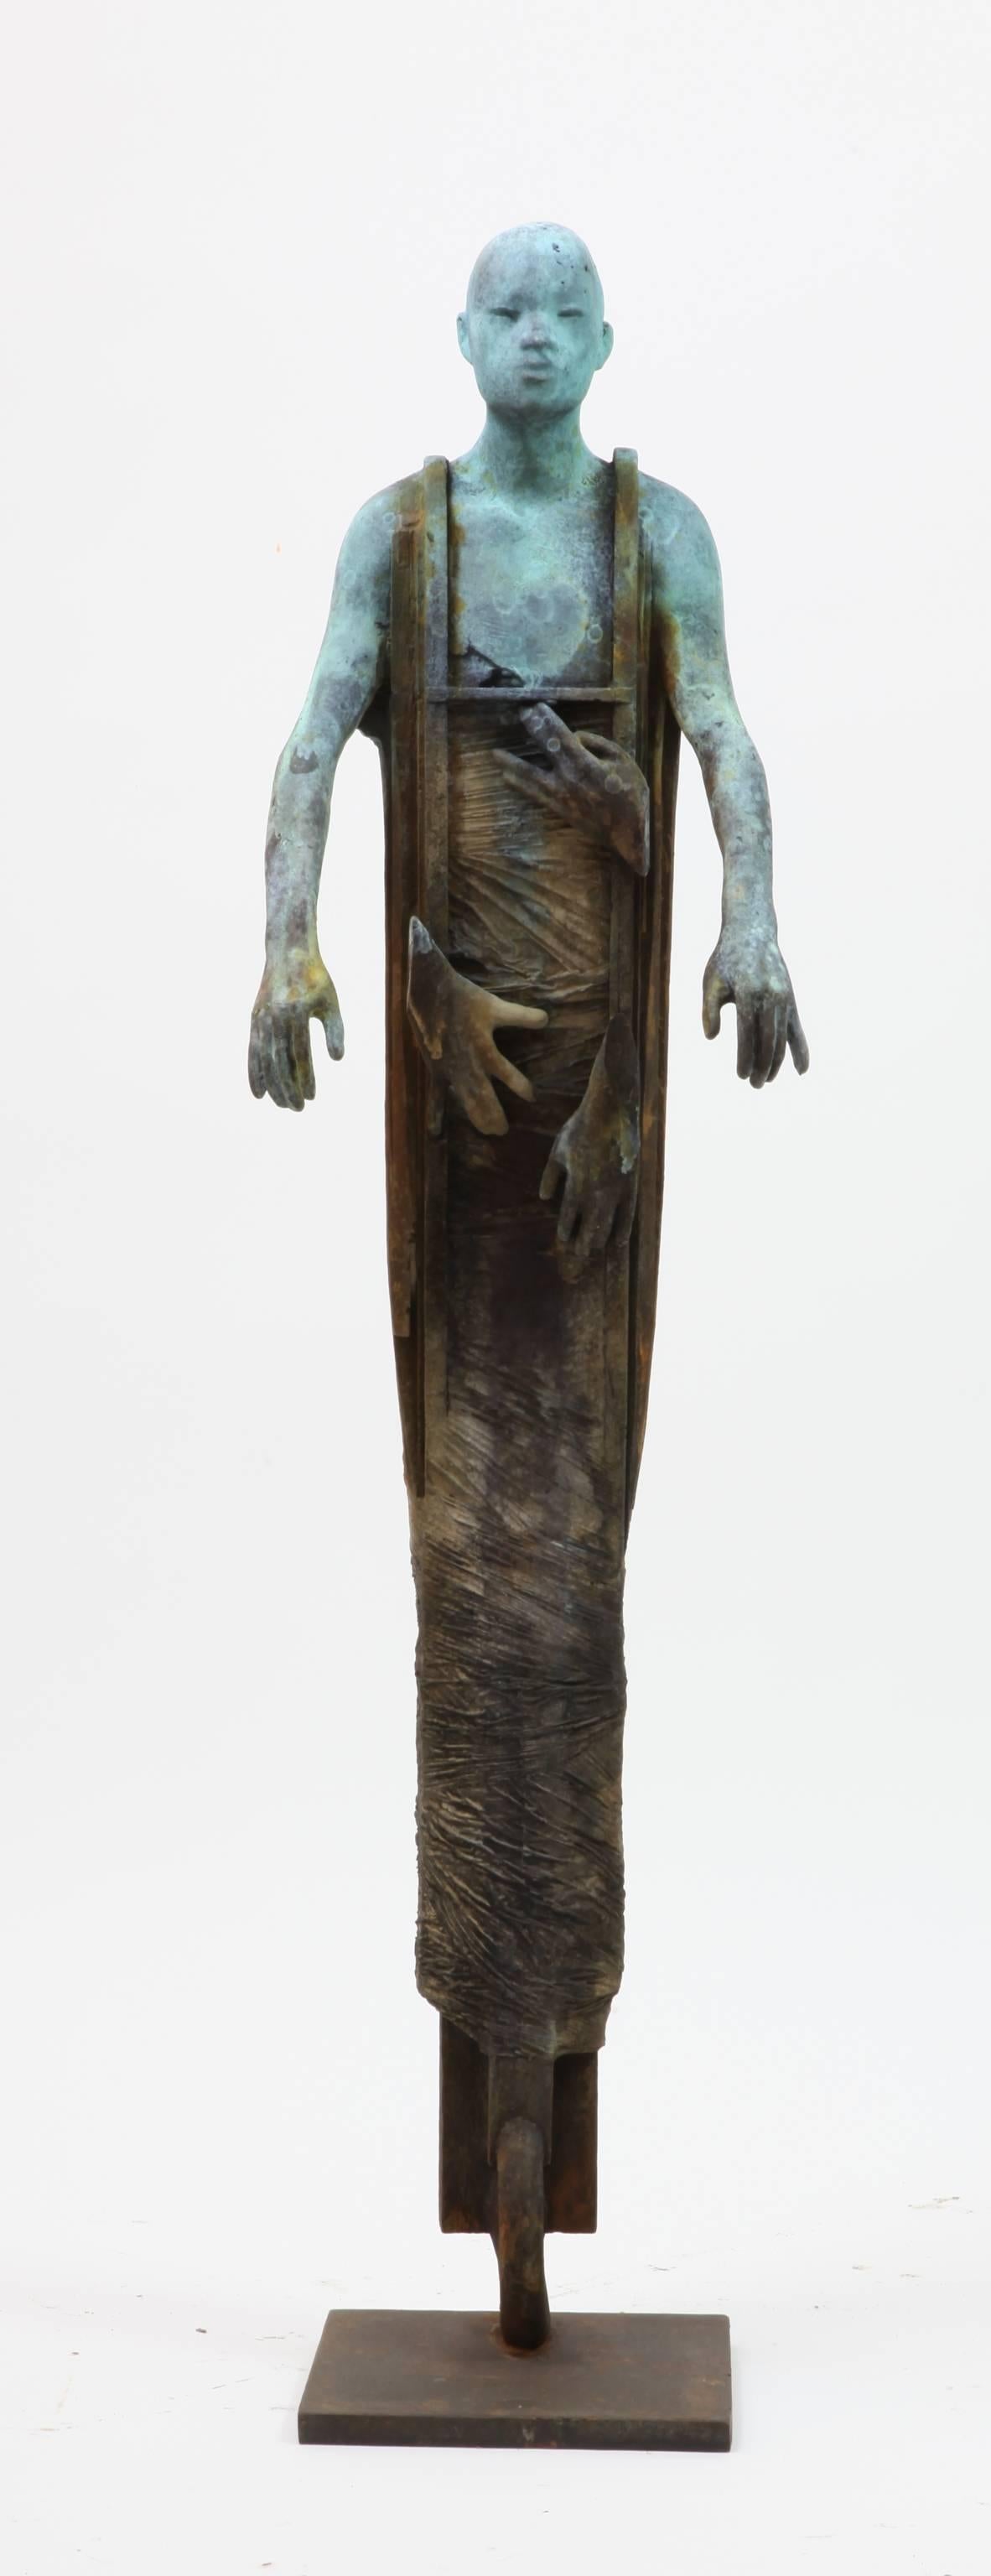 Centauro - Cast Bronze Figure Geometric and Organic Elements by Jesús Curiá - Sculpture by Jesus Curia Perez